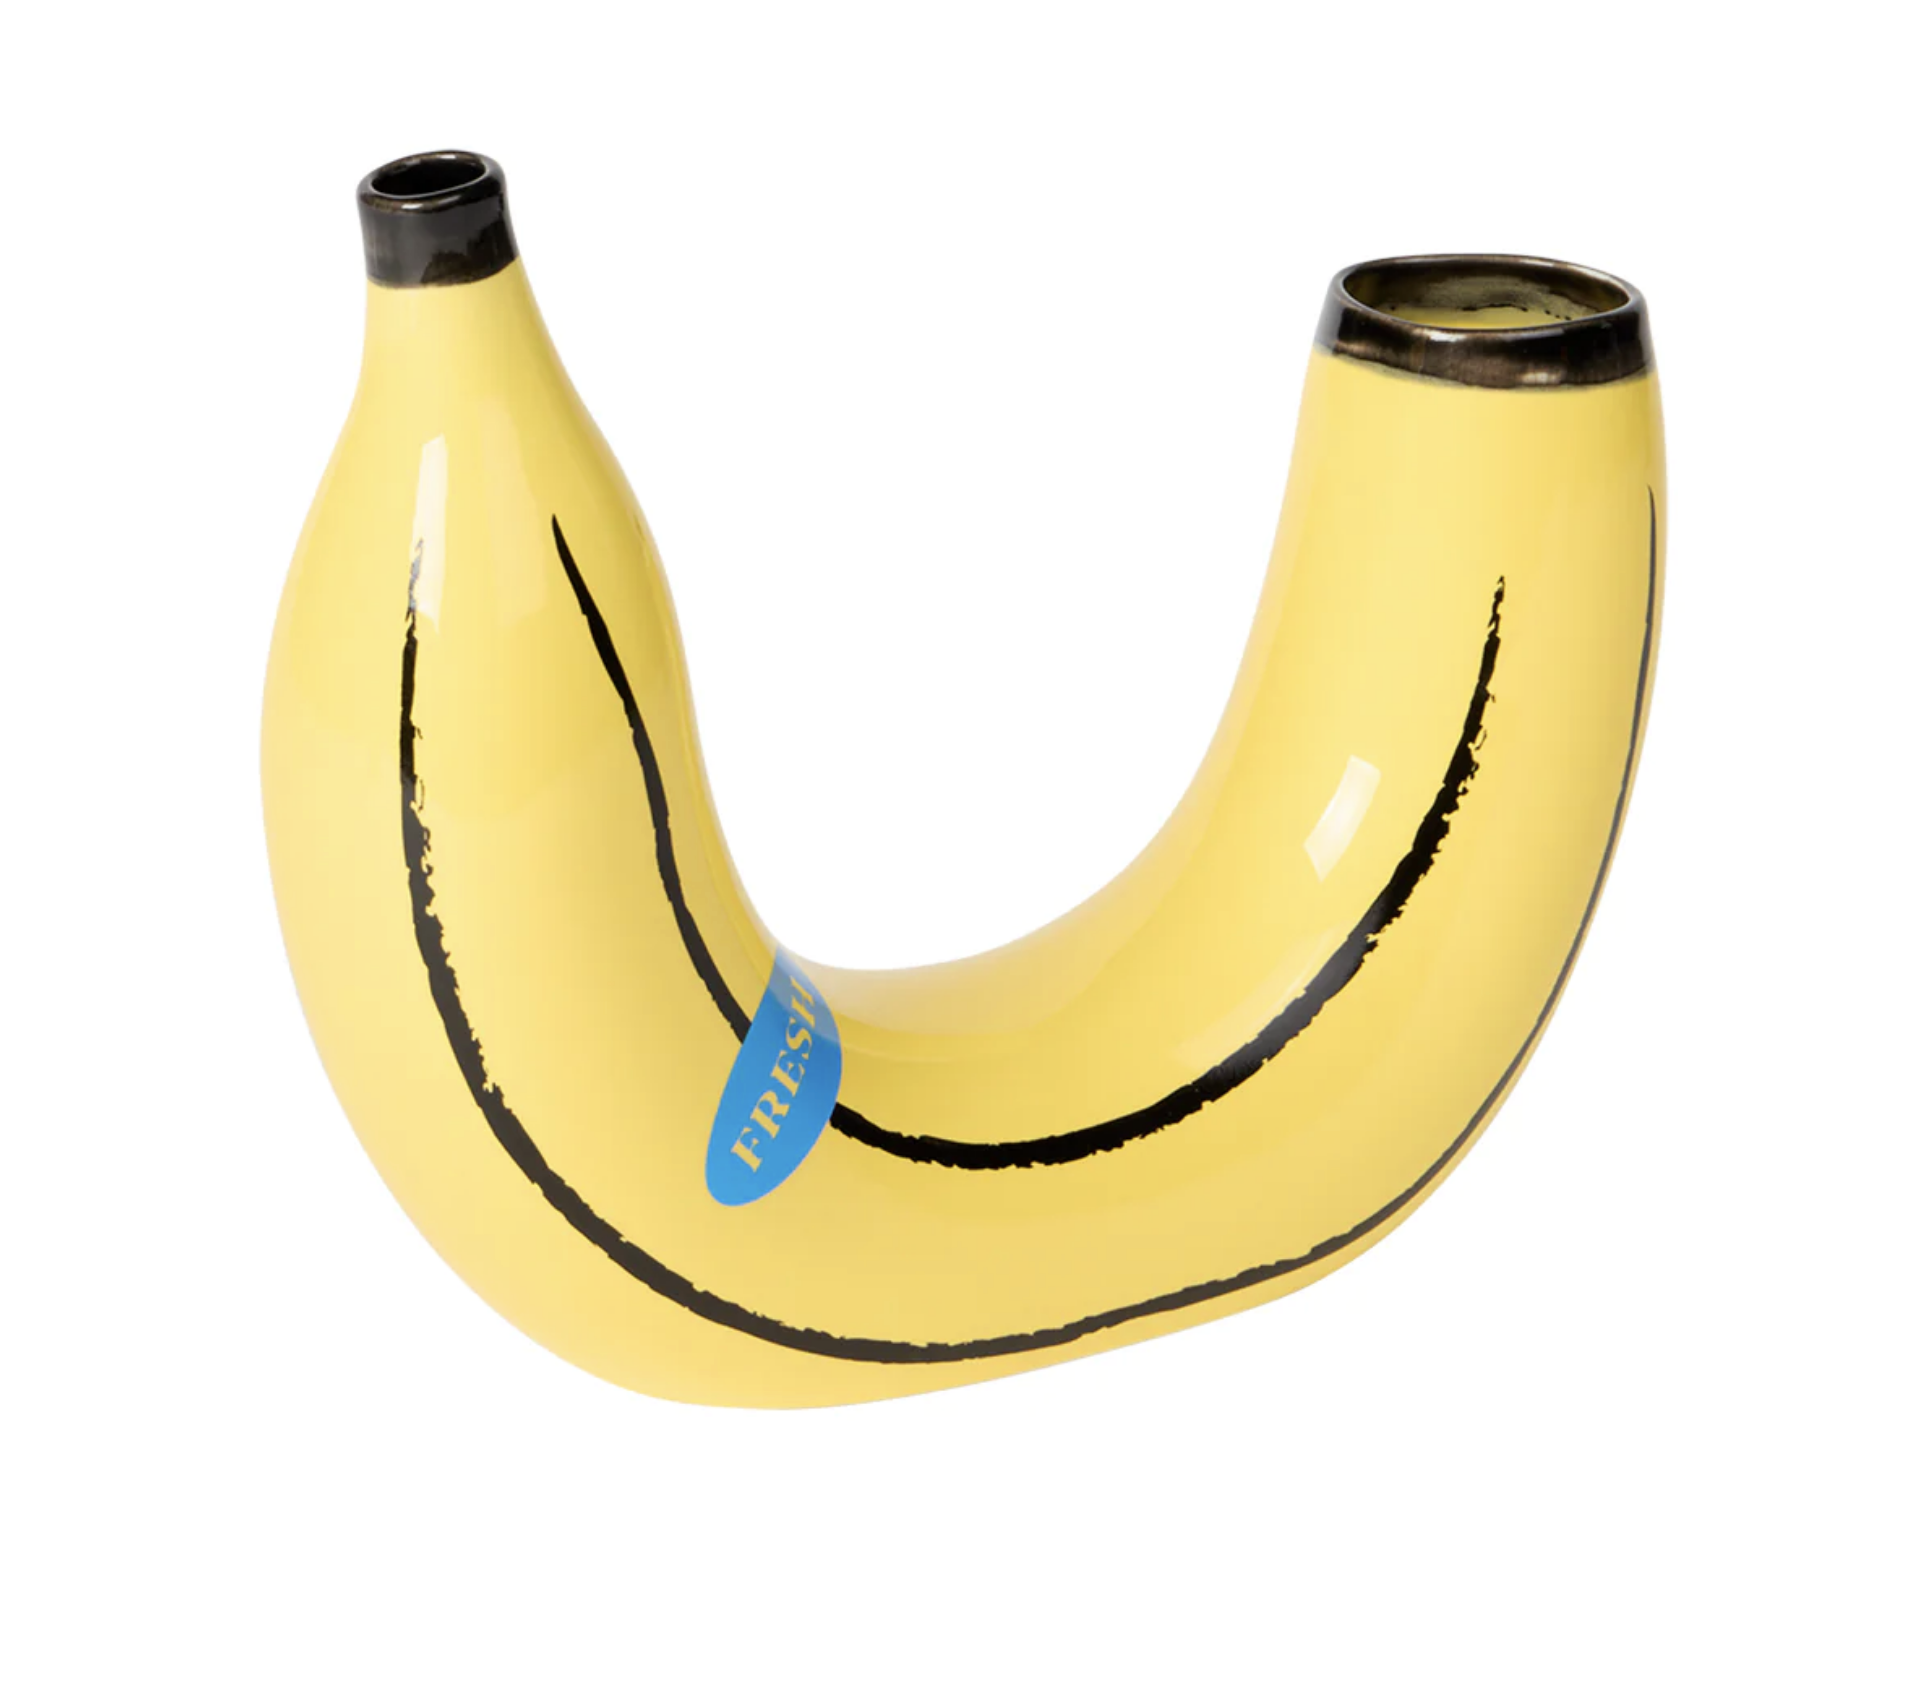 Banana Vase x Doiy